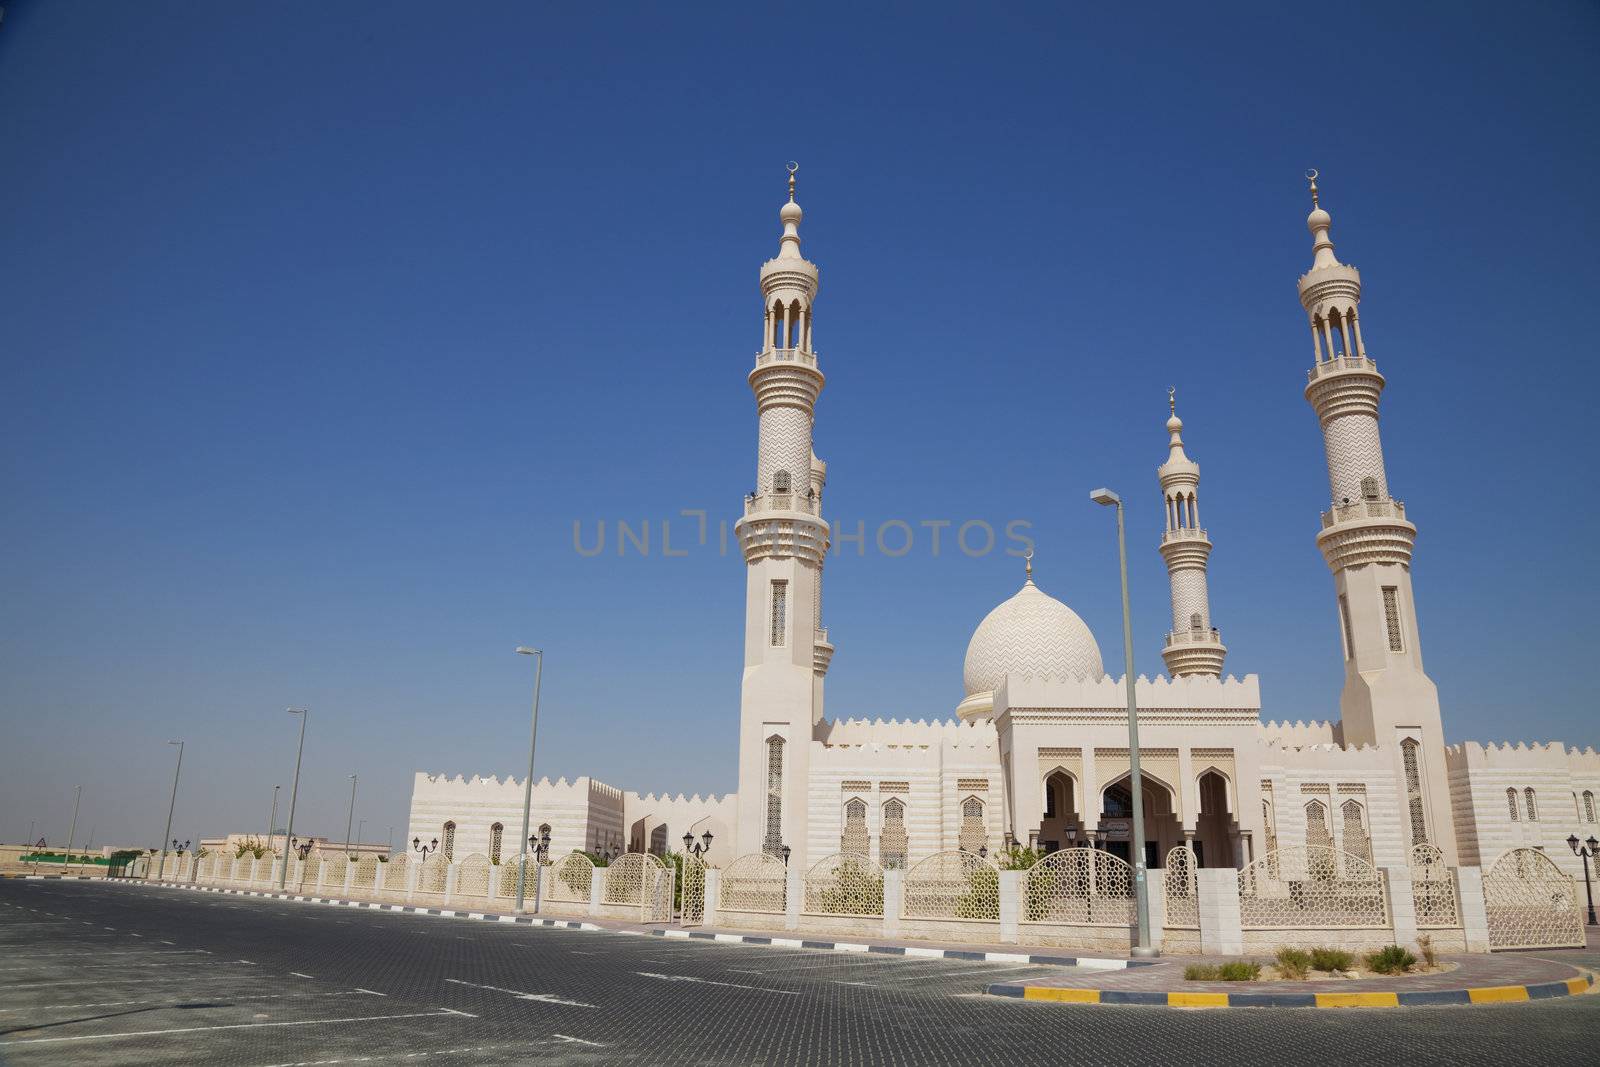 Image of the Al-Bahya Mosque, Abu Dhabi, United Arab Emirates.
